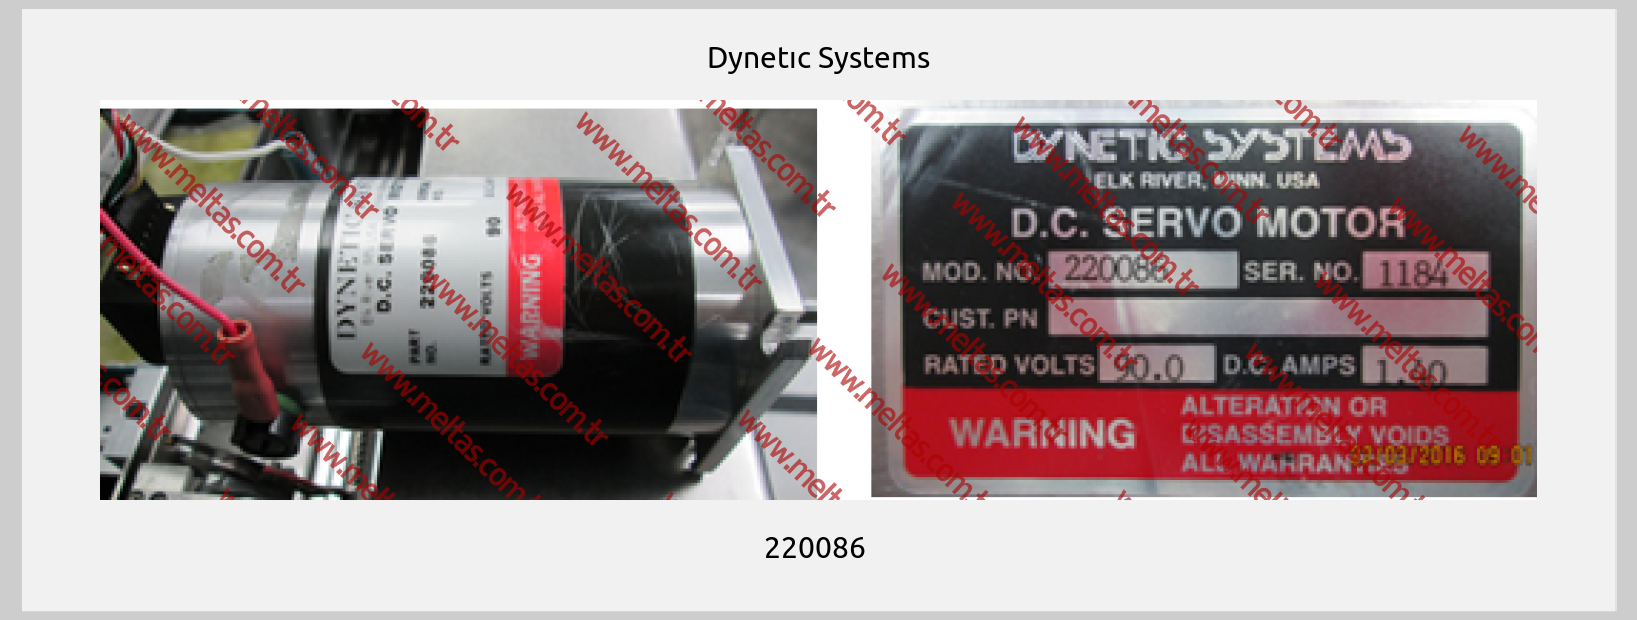 Dynetıc Systems - 220086 